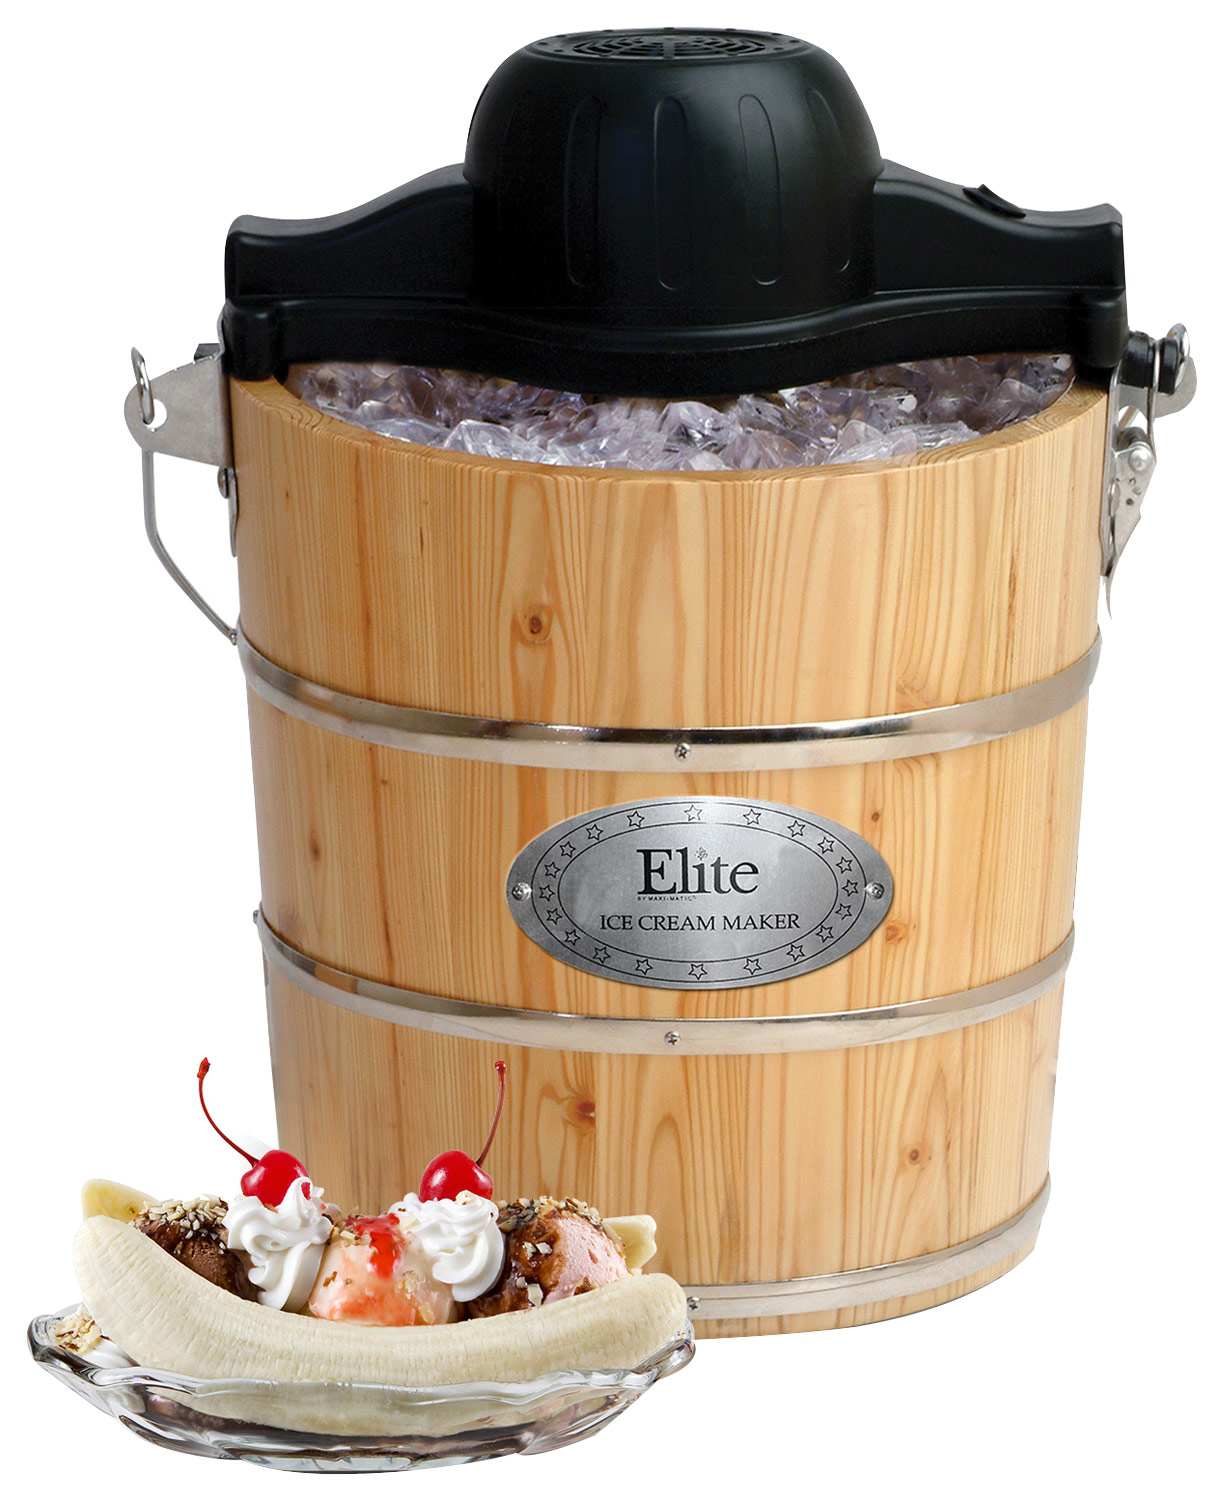 Elite - 4-Quart Old-Fashioned Ice Cream Maker - Brown